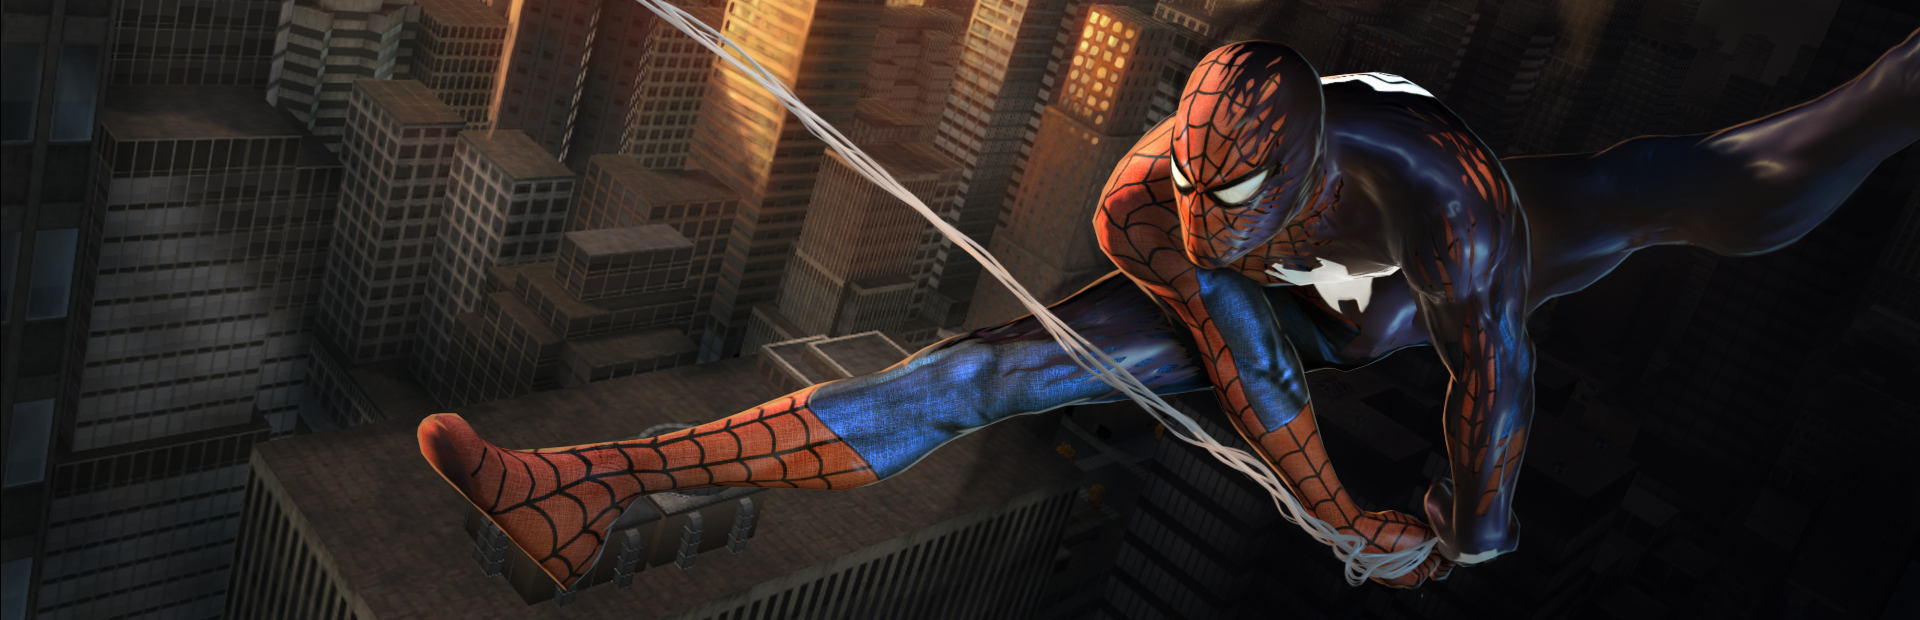 Spiderman Web Of Shadows + Ultimate Spiderman Pc Digital